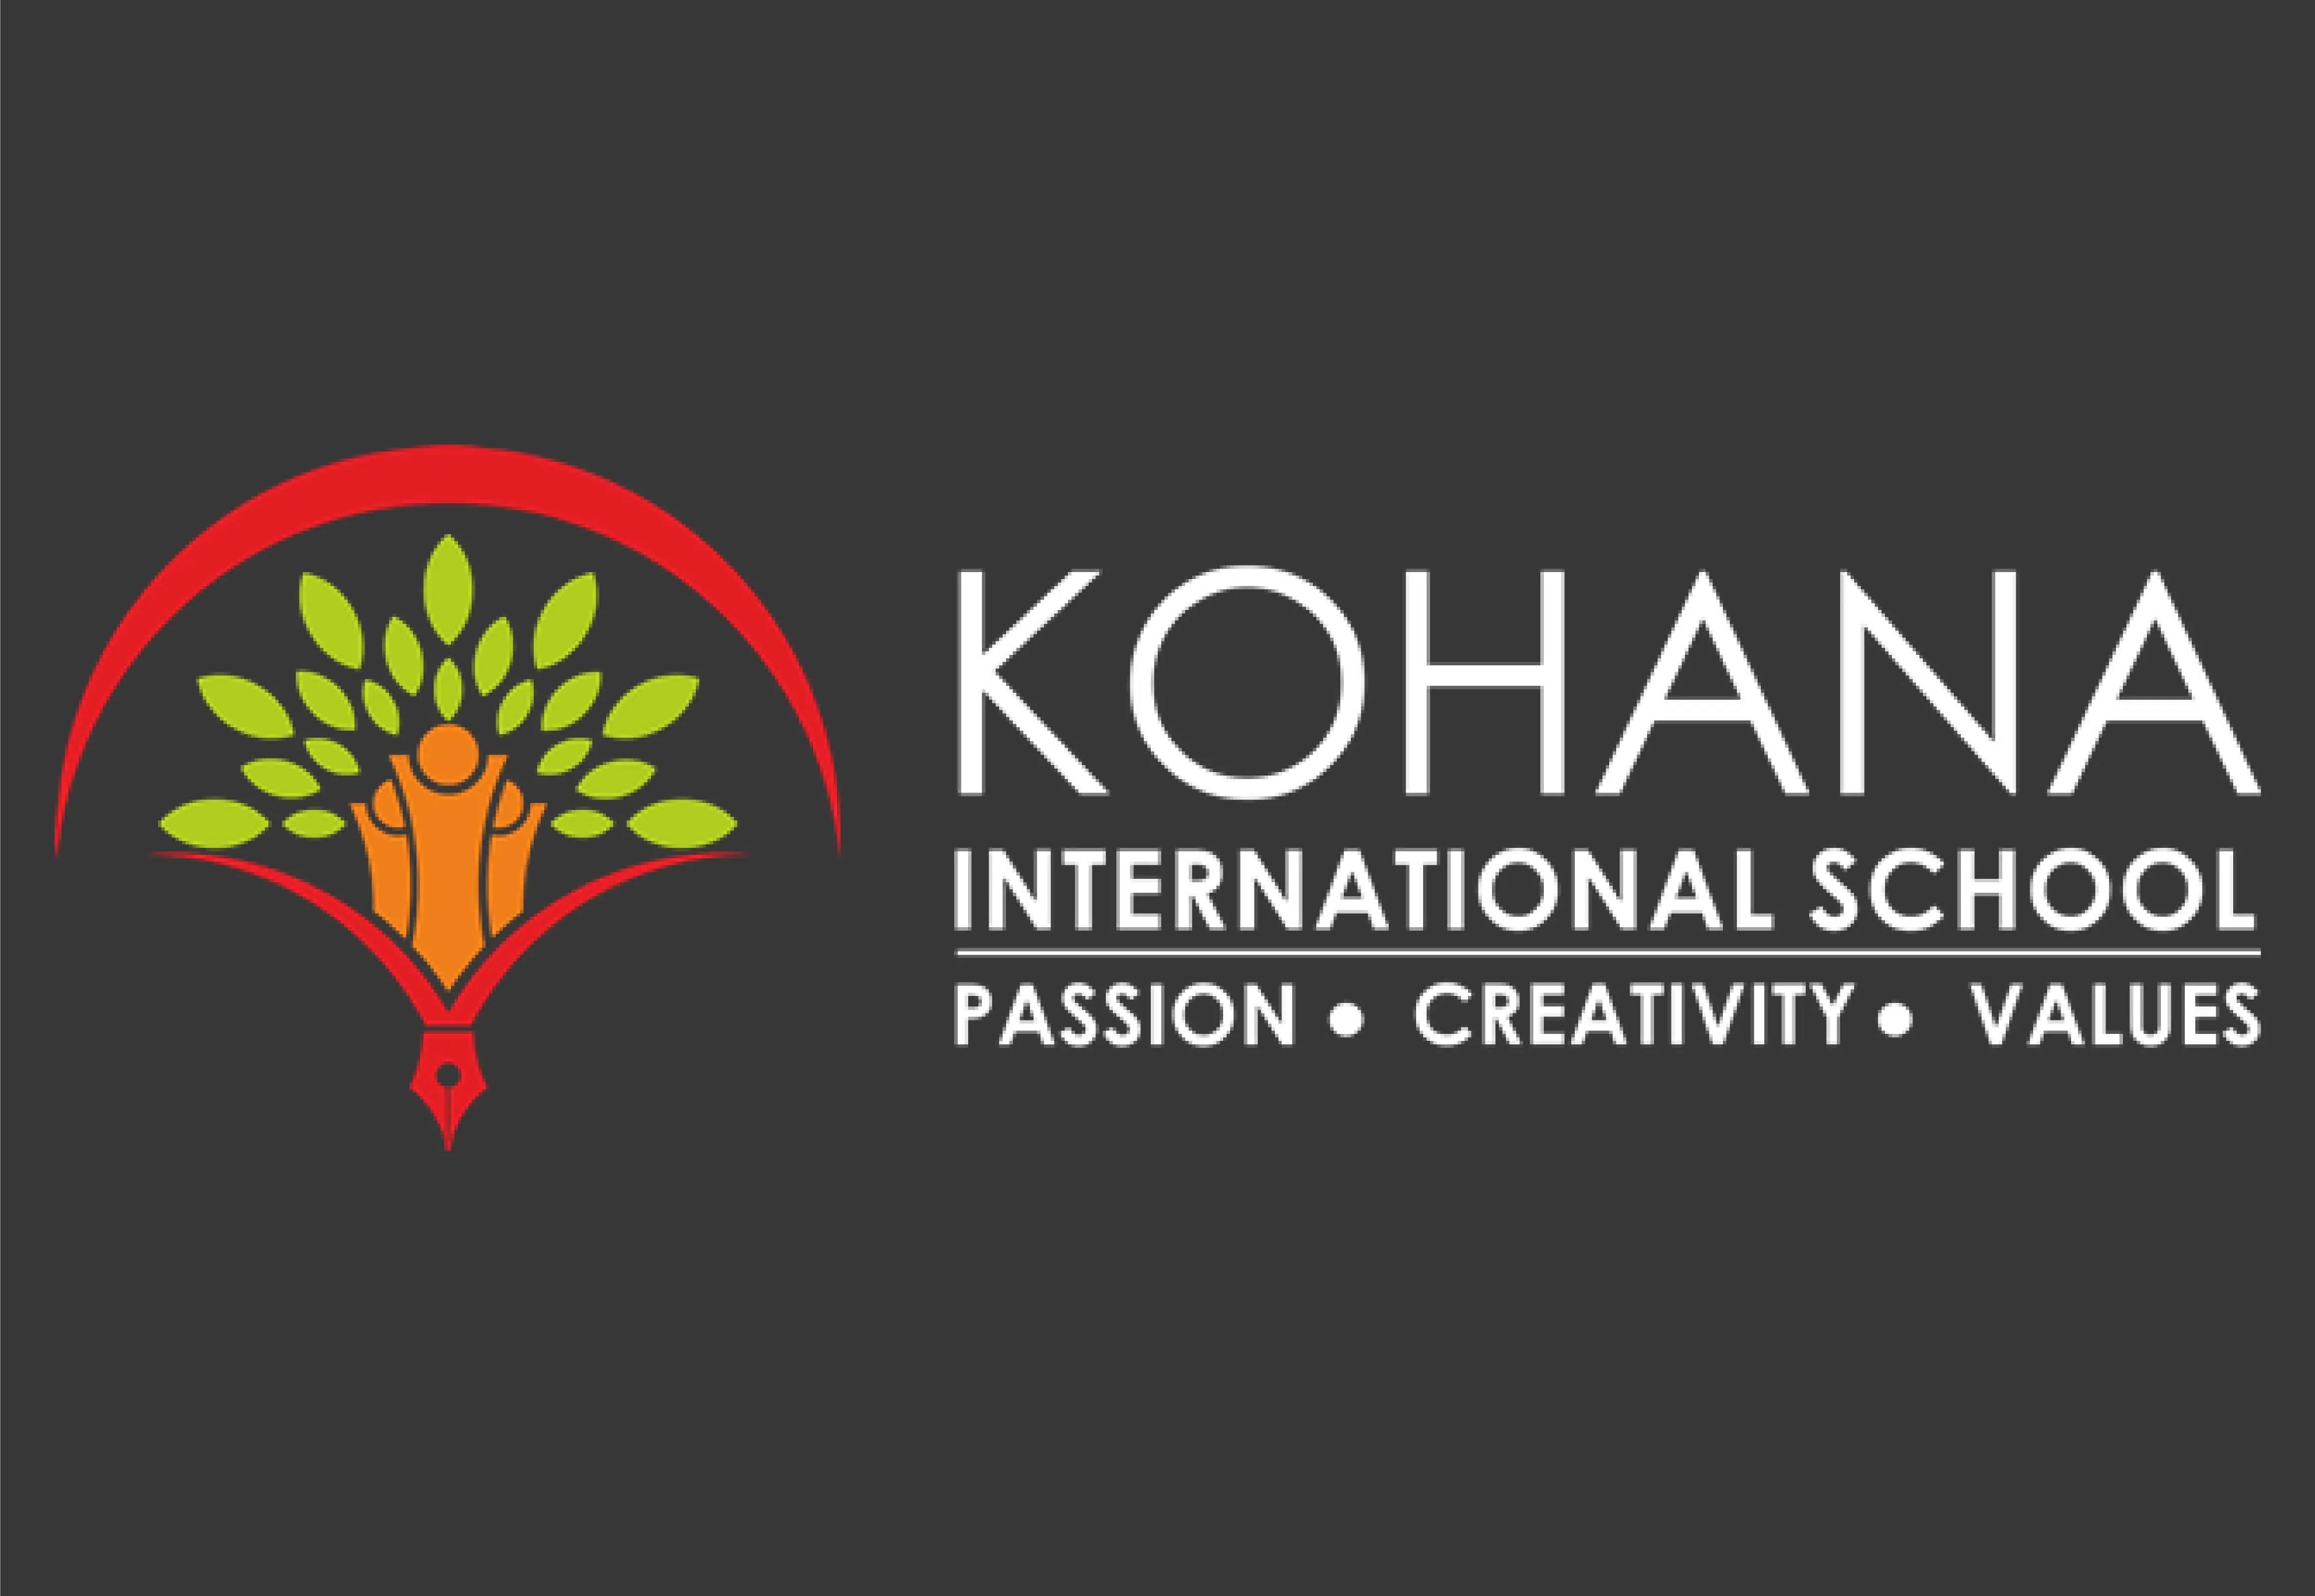 Kohana International School